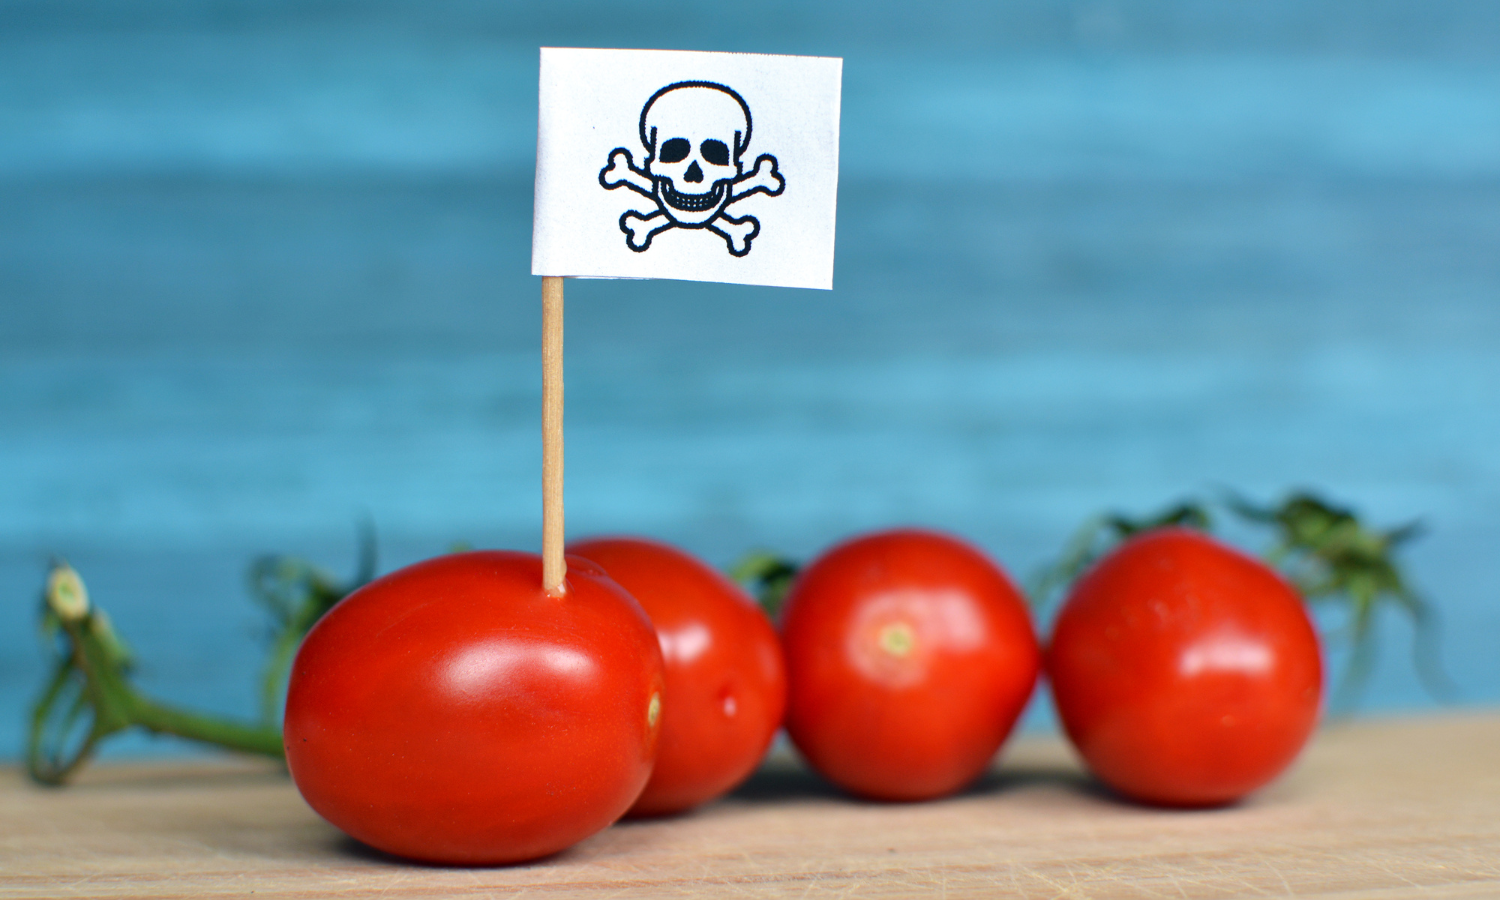 pesticides-carcinogenic-effect